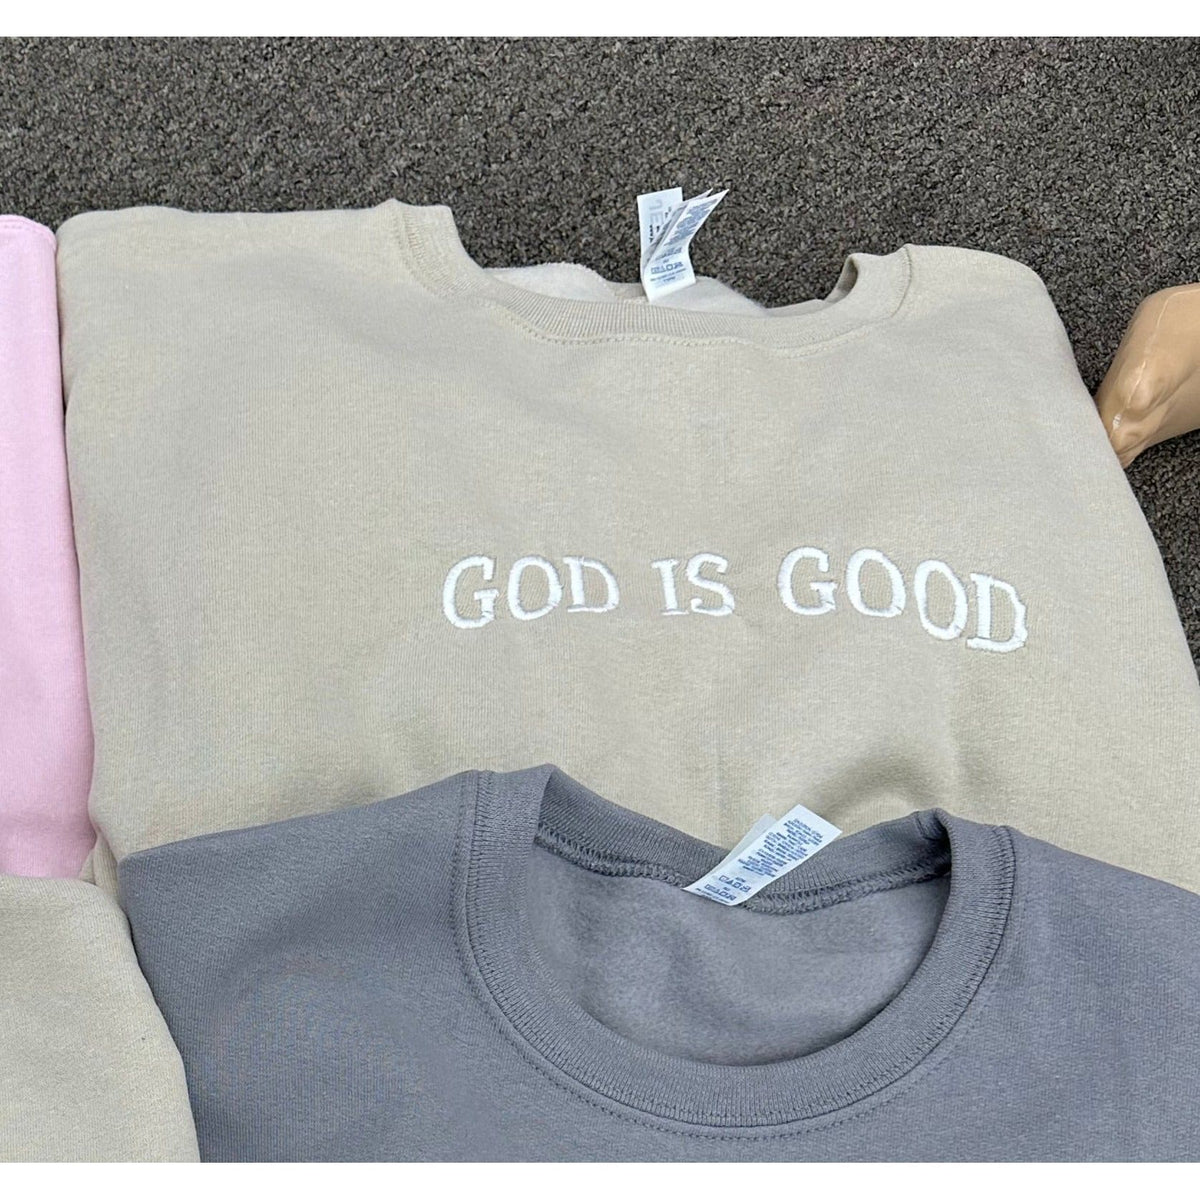 God is Good Tan embroidered Sweatshirt